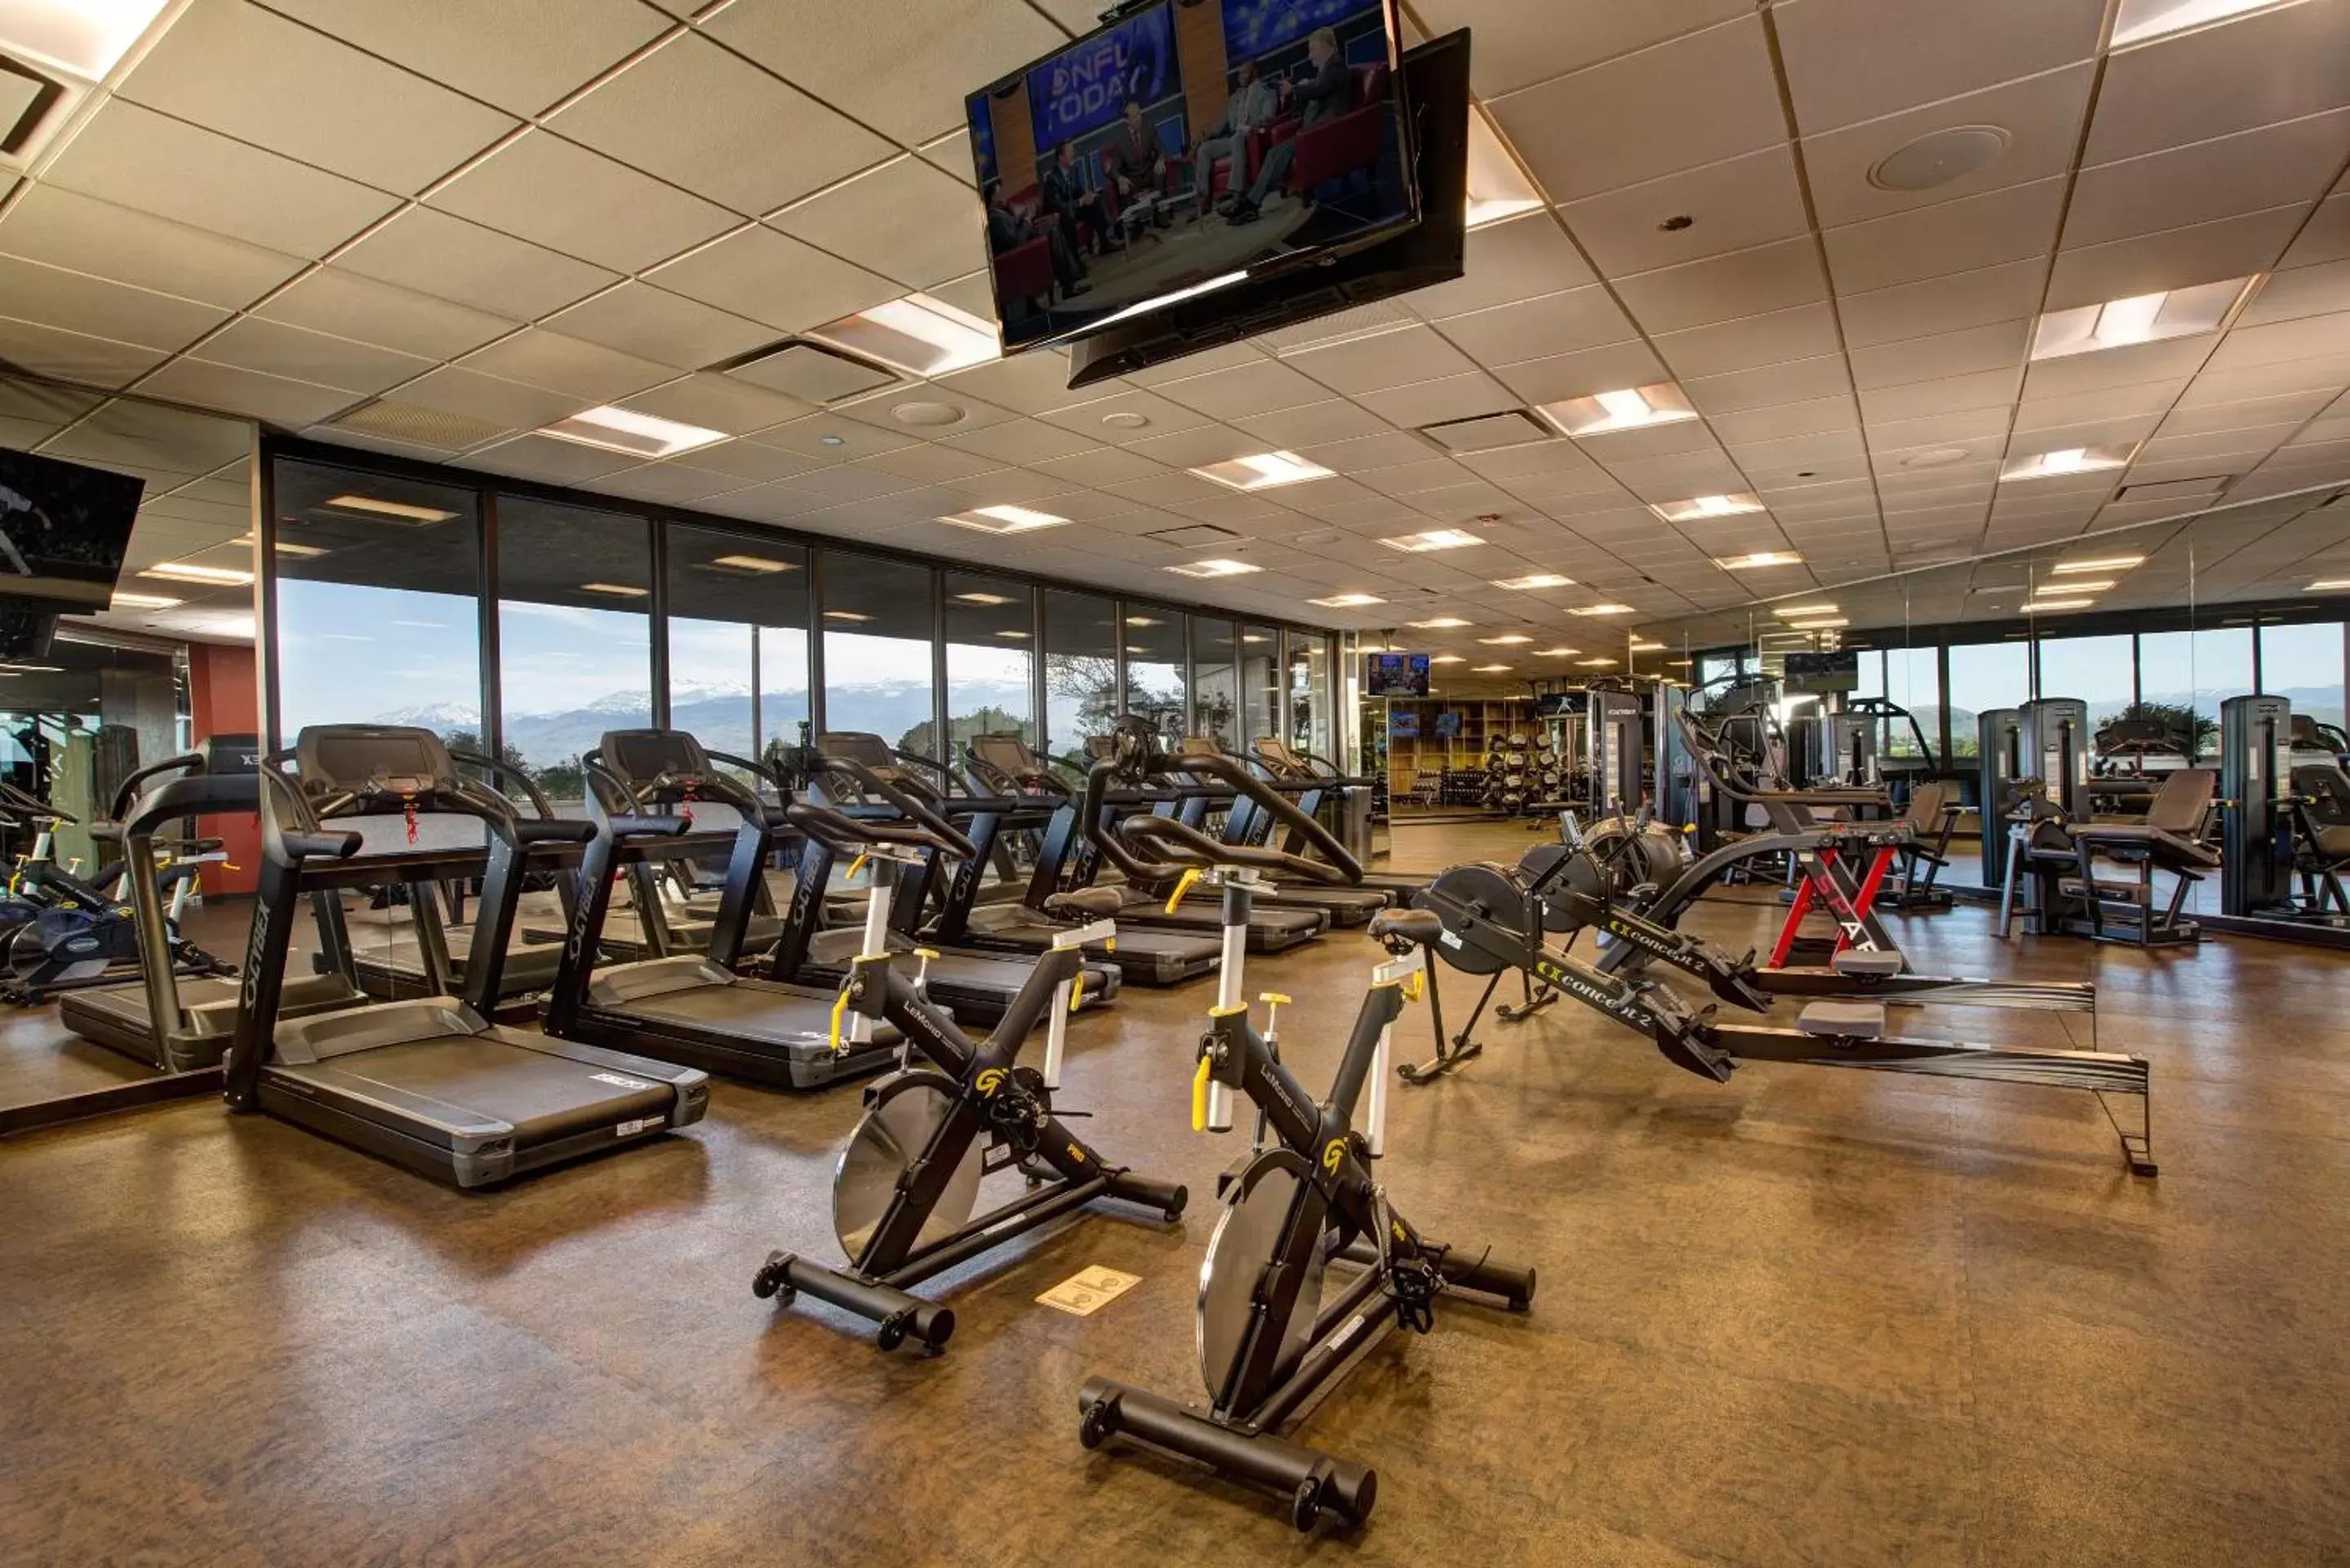 Fitness centre/facilities, Fitness Center/Facilities in Nugget Casino Resort